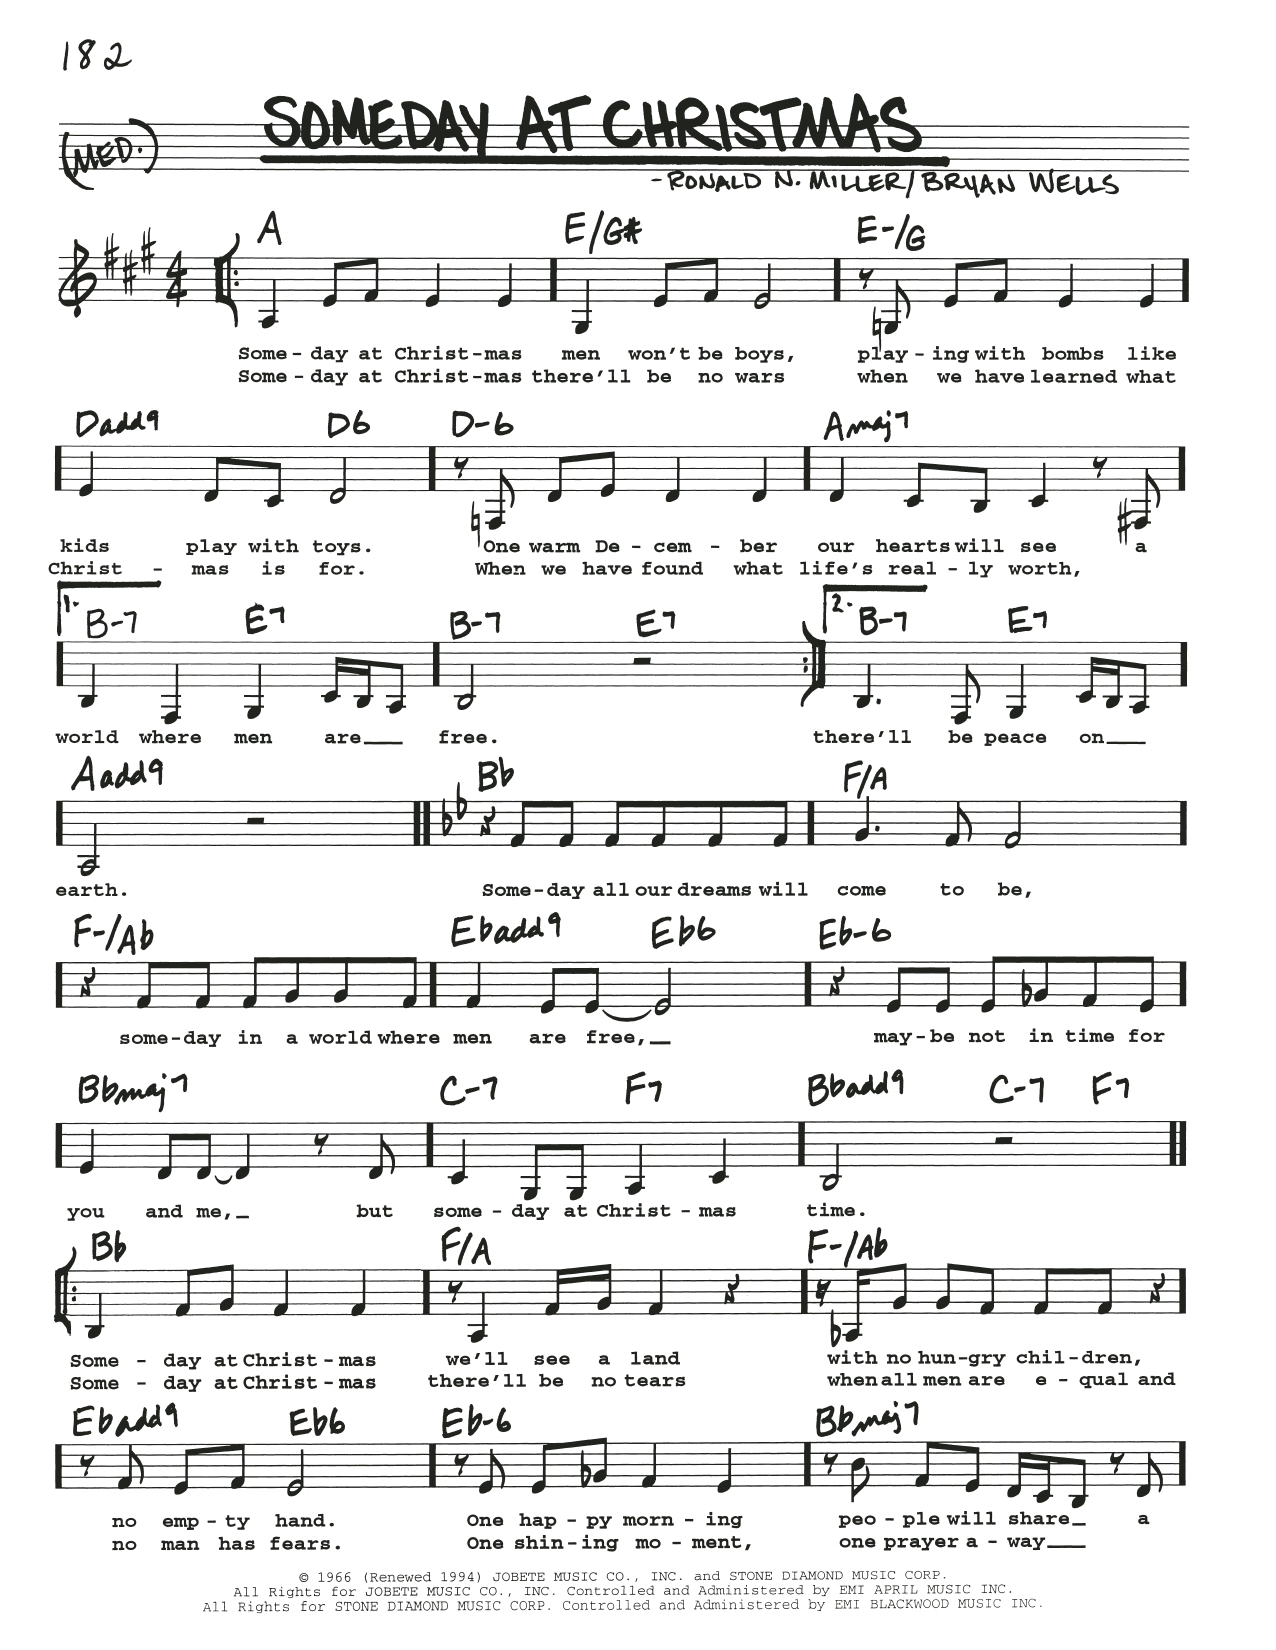 Bryan Wells Someday At Christmas Sheet Music Notes & Chords for Real Book – Melody, Lyrics & Chords - Download or Print PDF